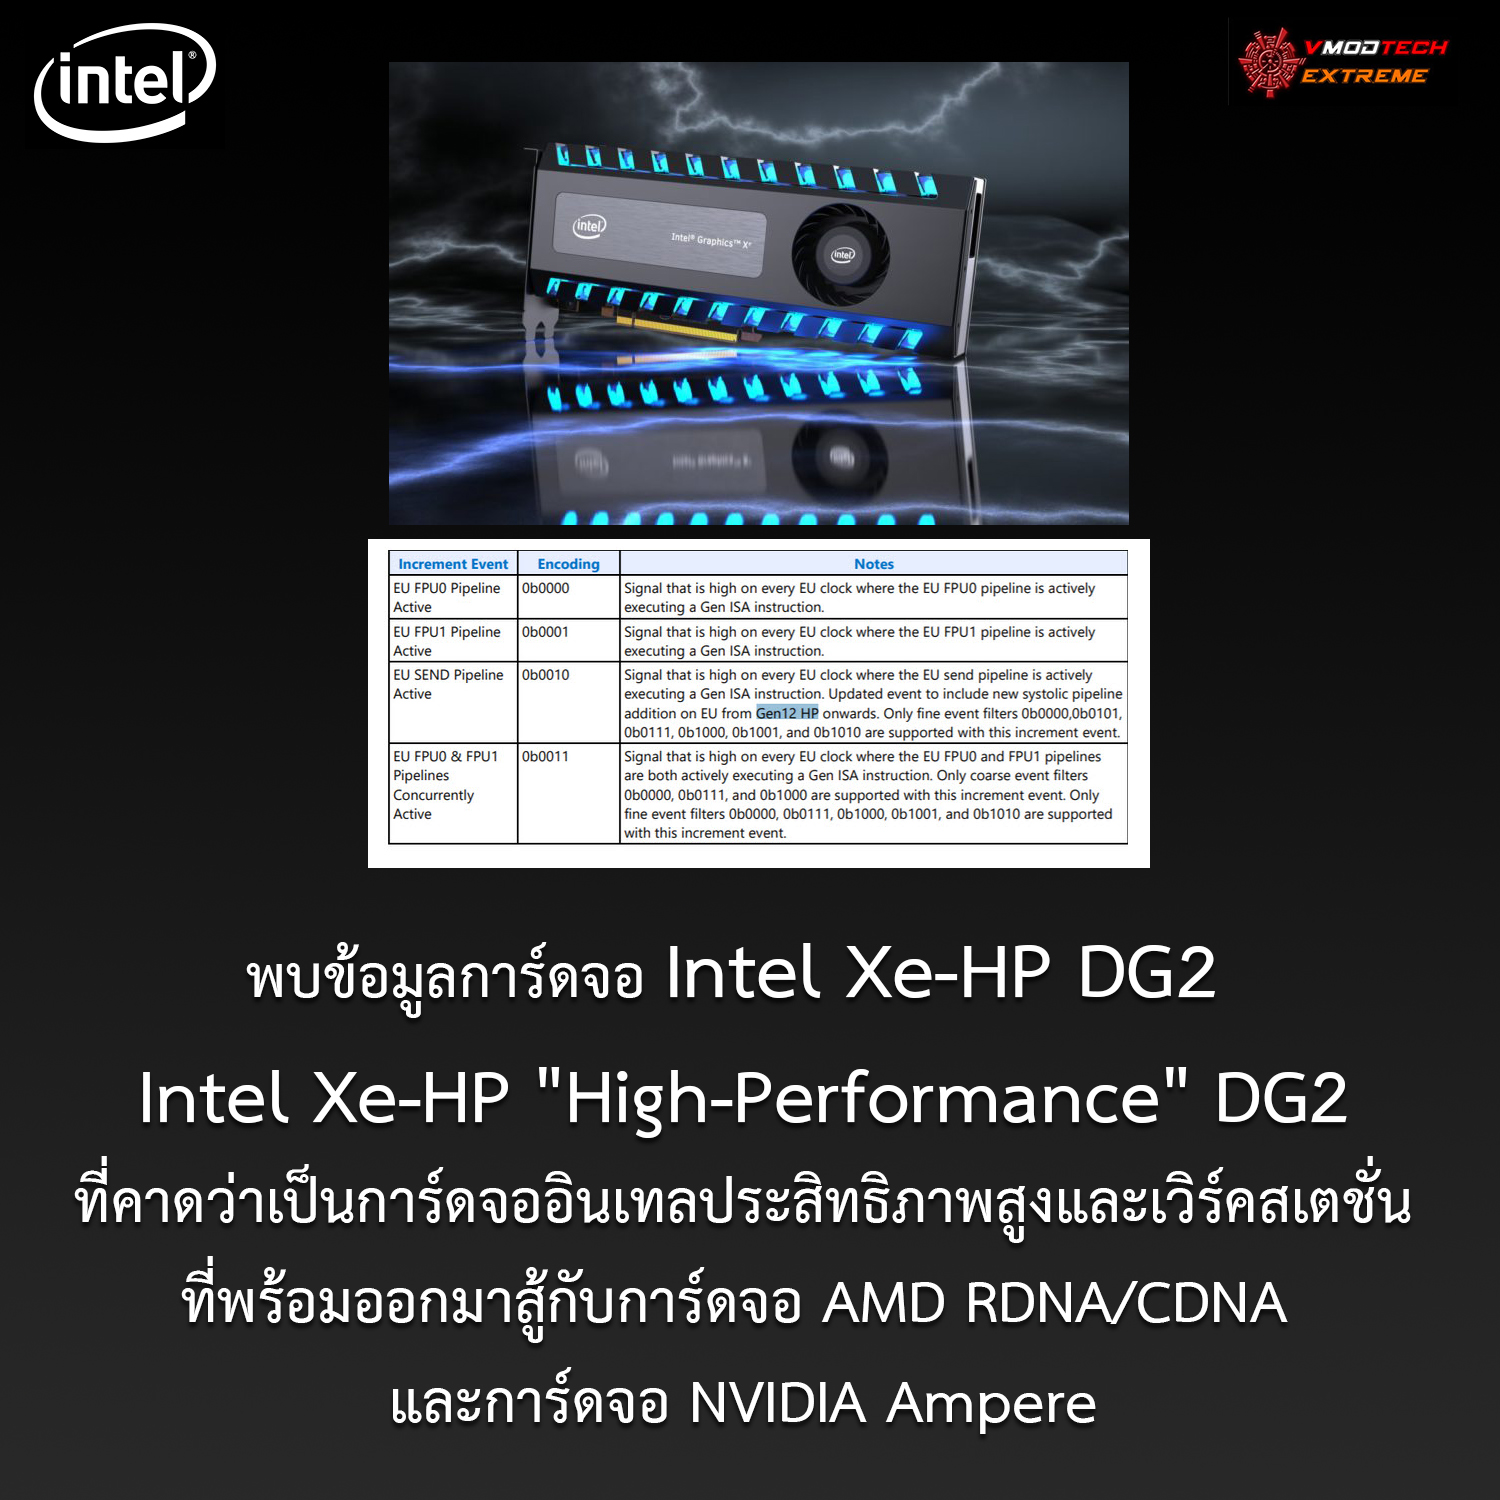 intel xe hp dg2 พบข้อมูลการ์ดจอ Intel Xe HP DG2 ที่คาดว่าเป็นการ์ดจออินเทลประสิทธิภาพสูงและเวิร์คสเตชั่นที่พร้อมออกมาสู้กับการ์ดจอ AMD RDNA/CDNA และการ์ดจอ NVIDIA Ampere